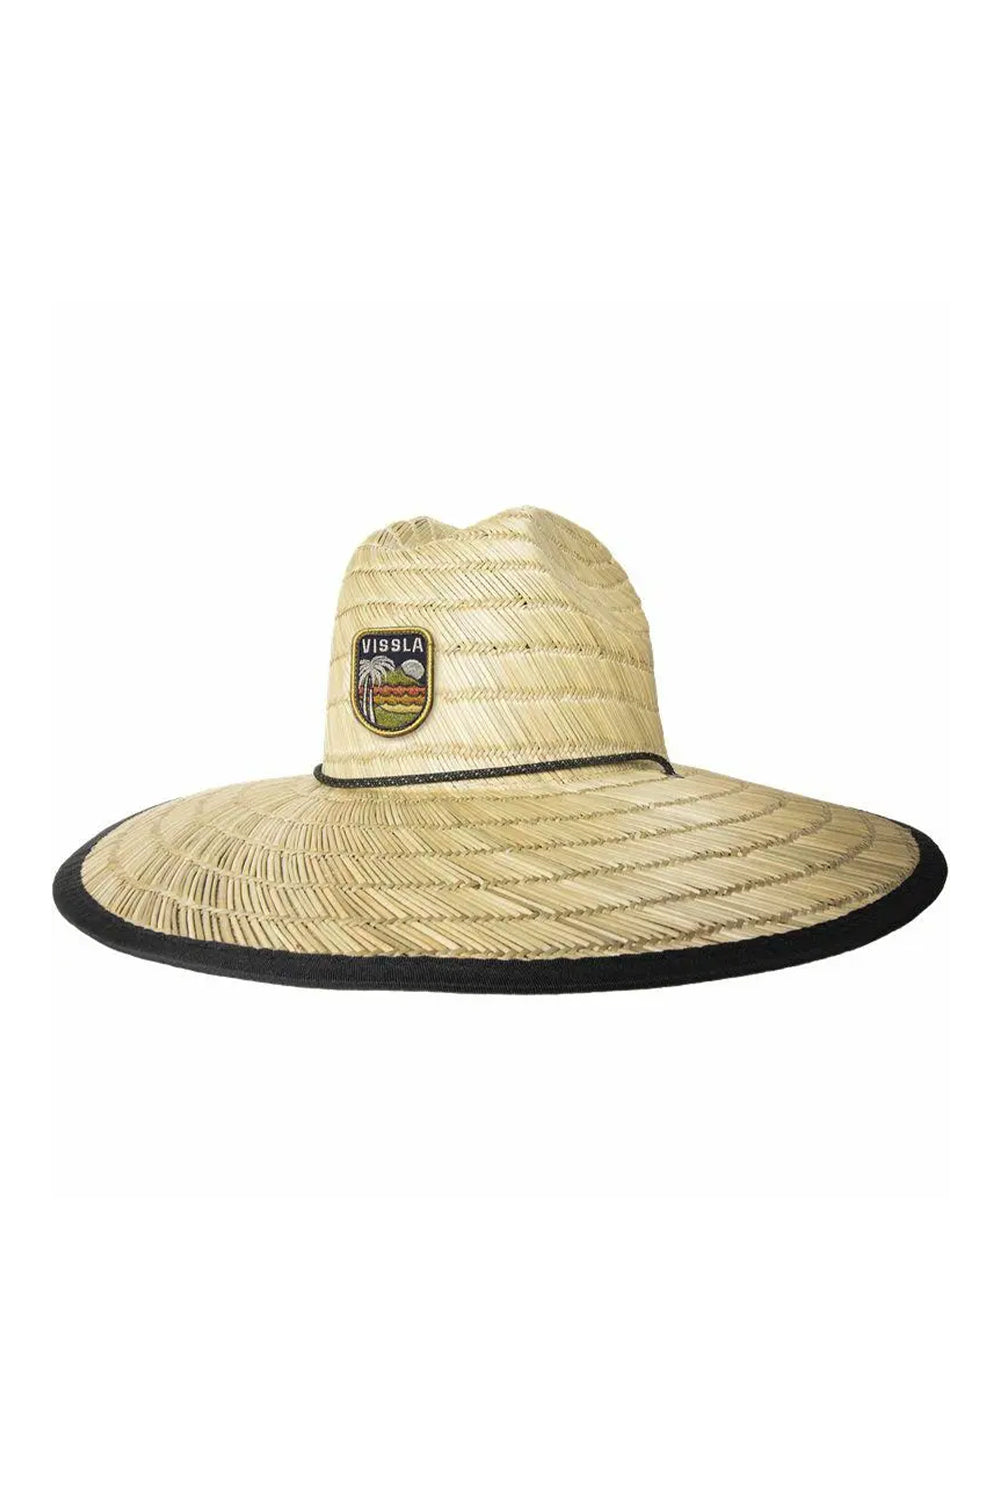 Vissla Outside Sets Lifeguard Straw Hat